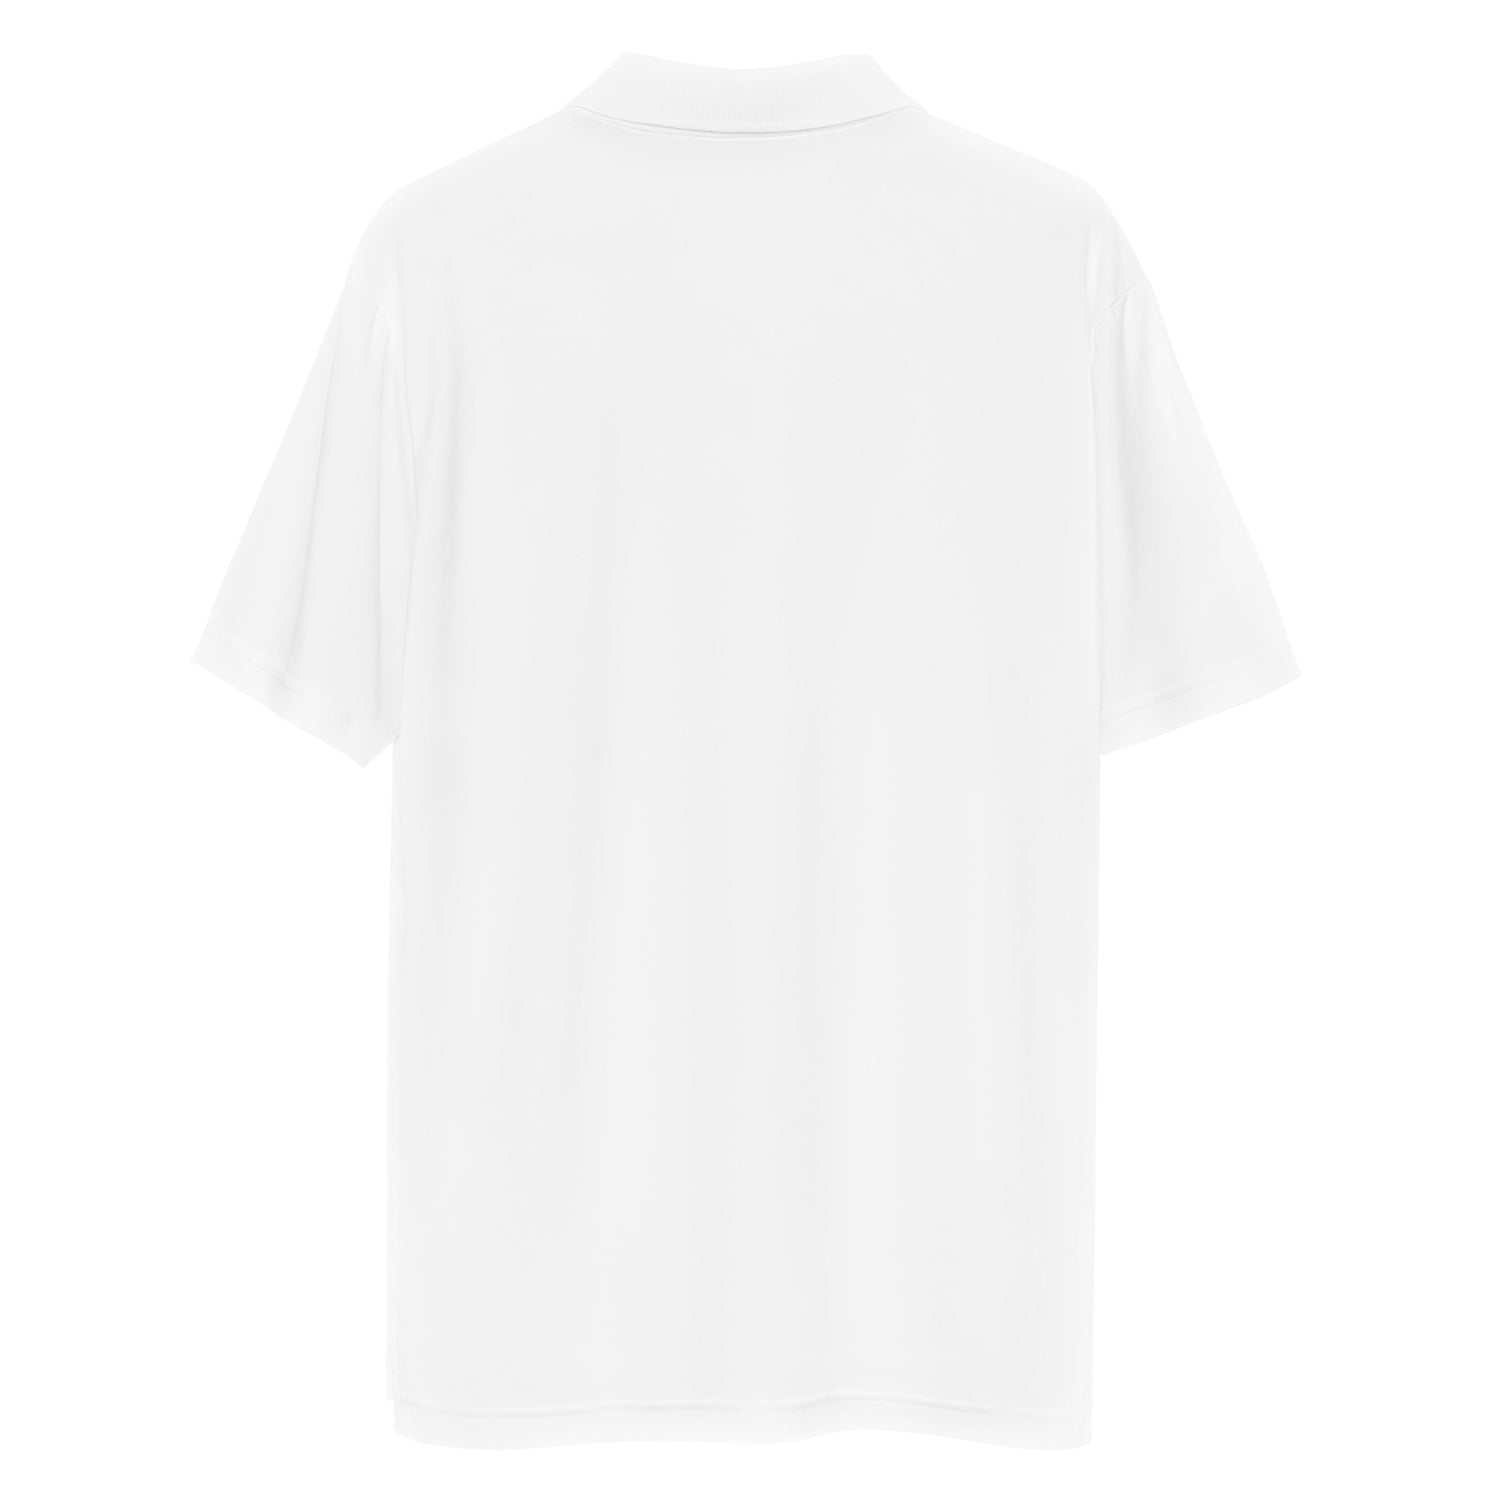 LAX World - Adidas Performance White Lacrosse Polo Shirt  - White back